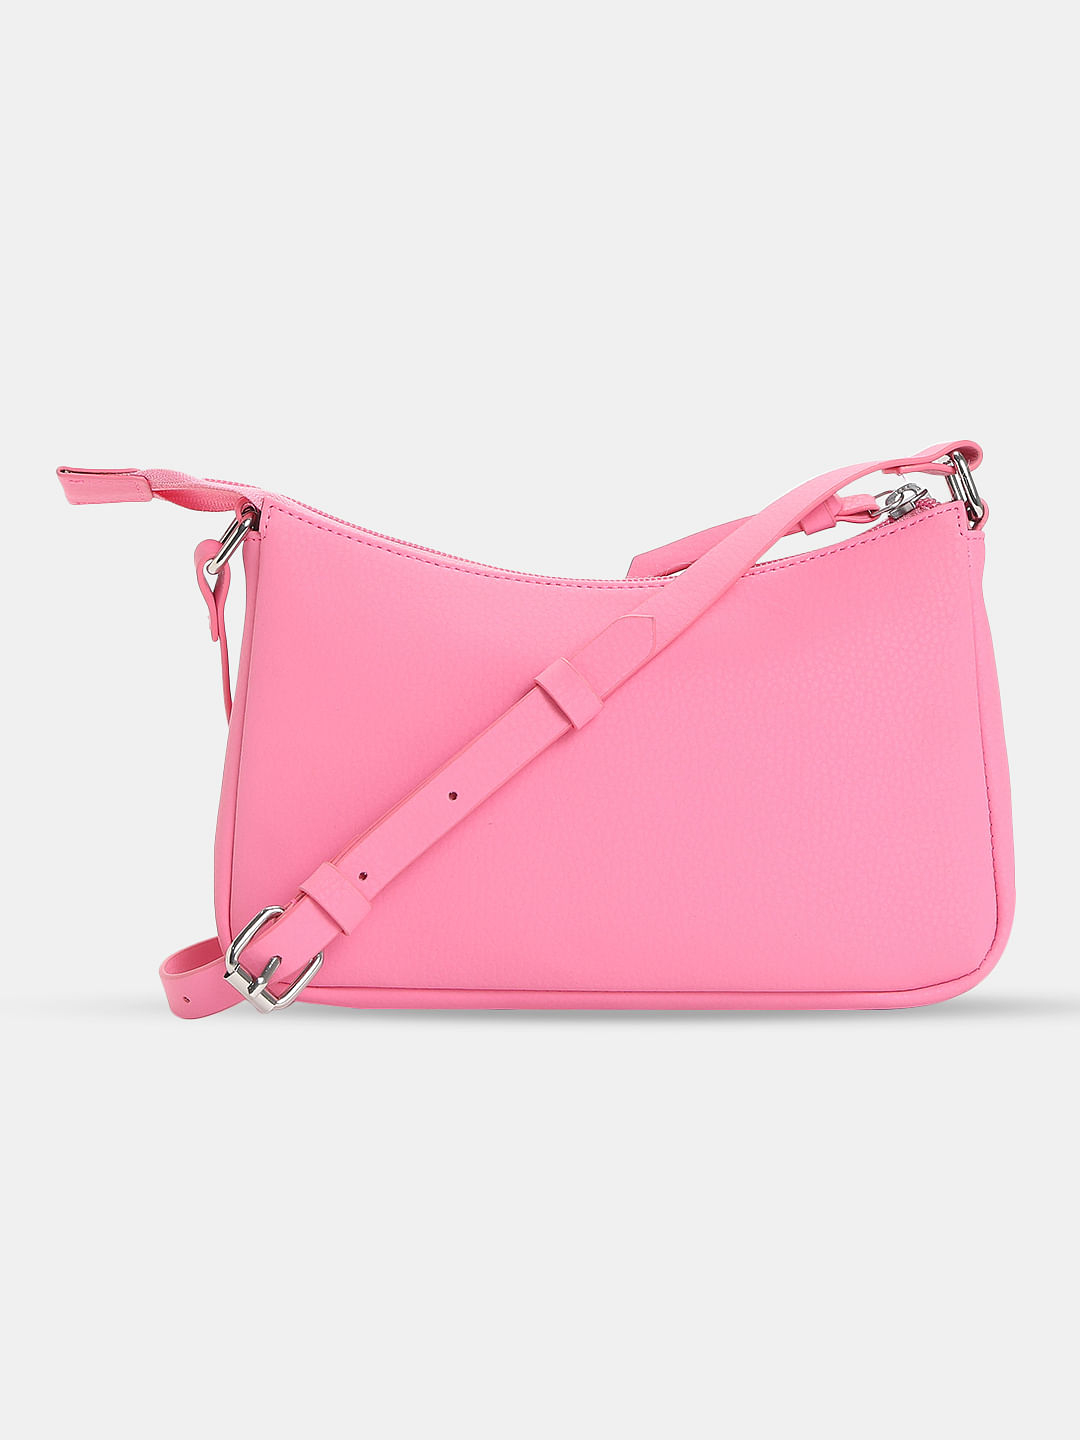 Versona | faux leather pink floral bag set